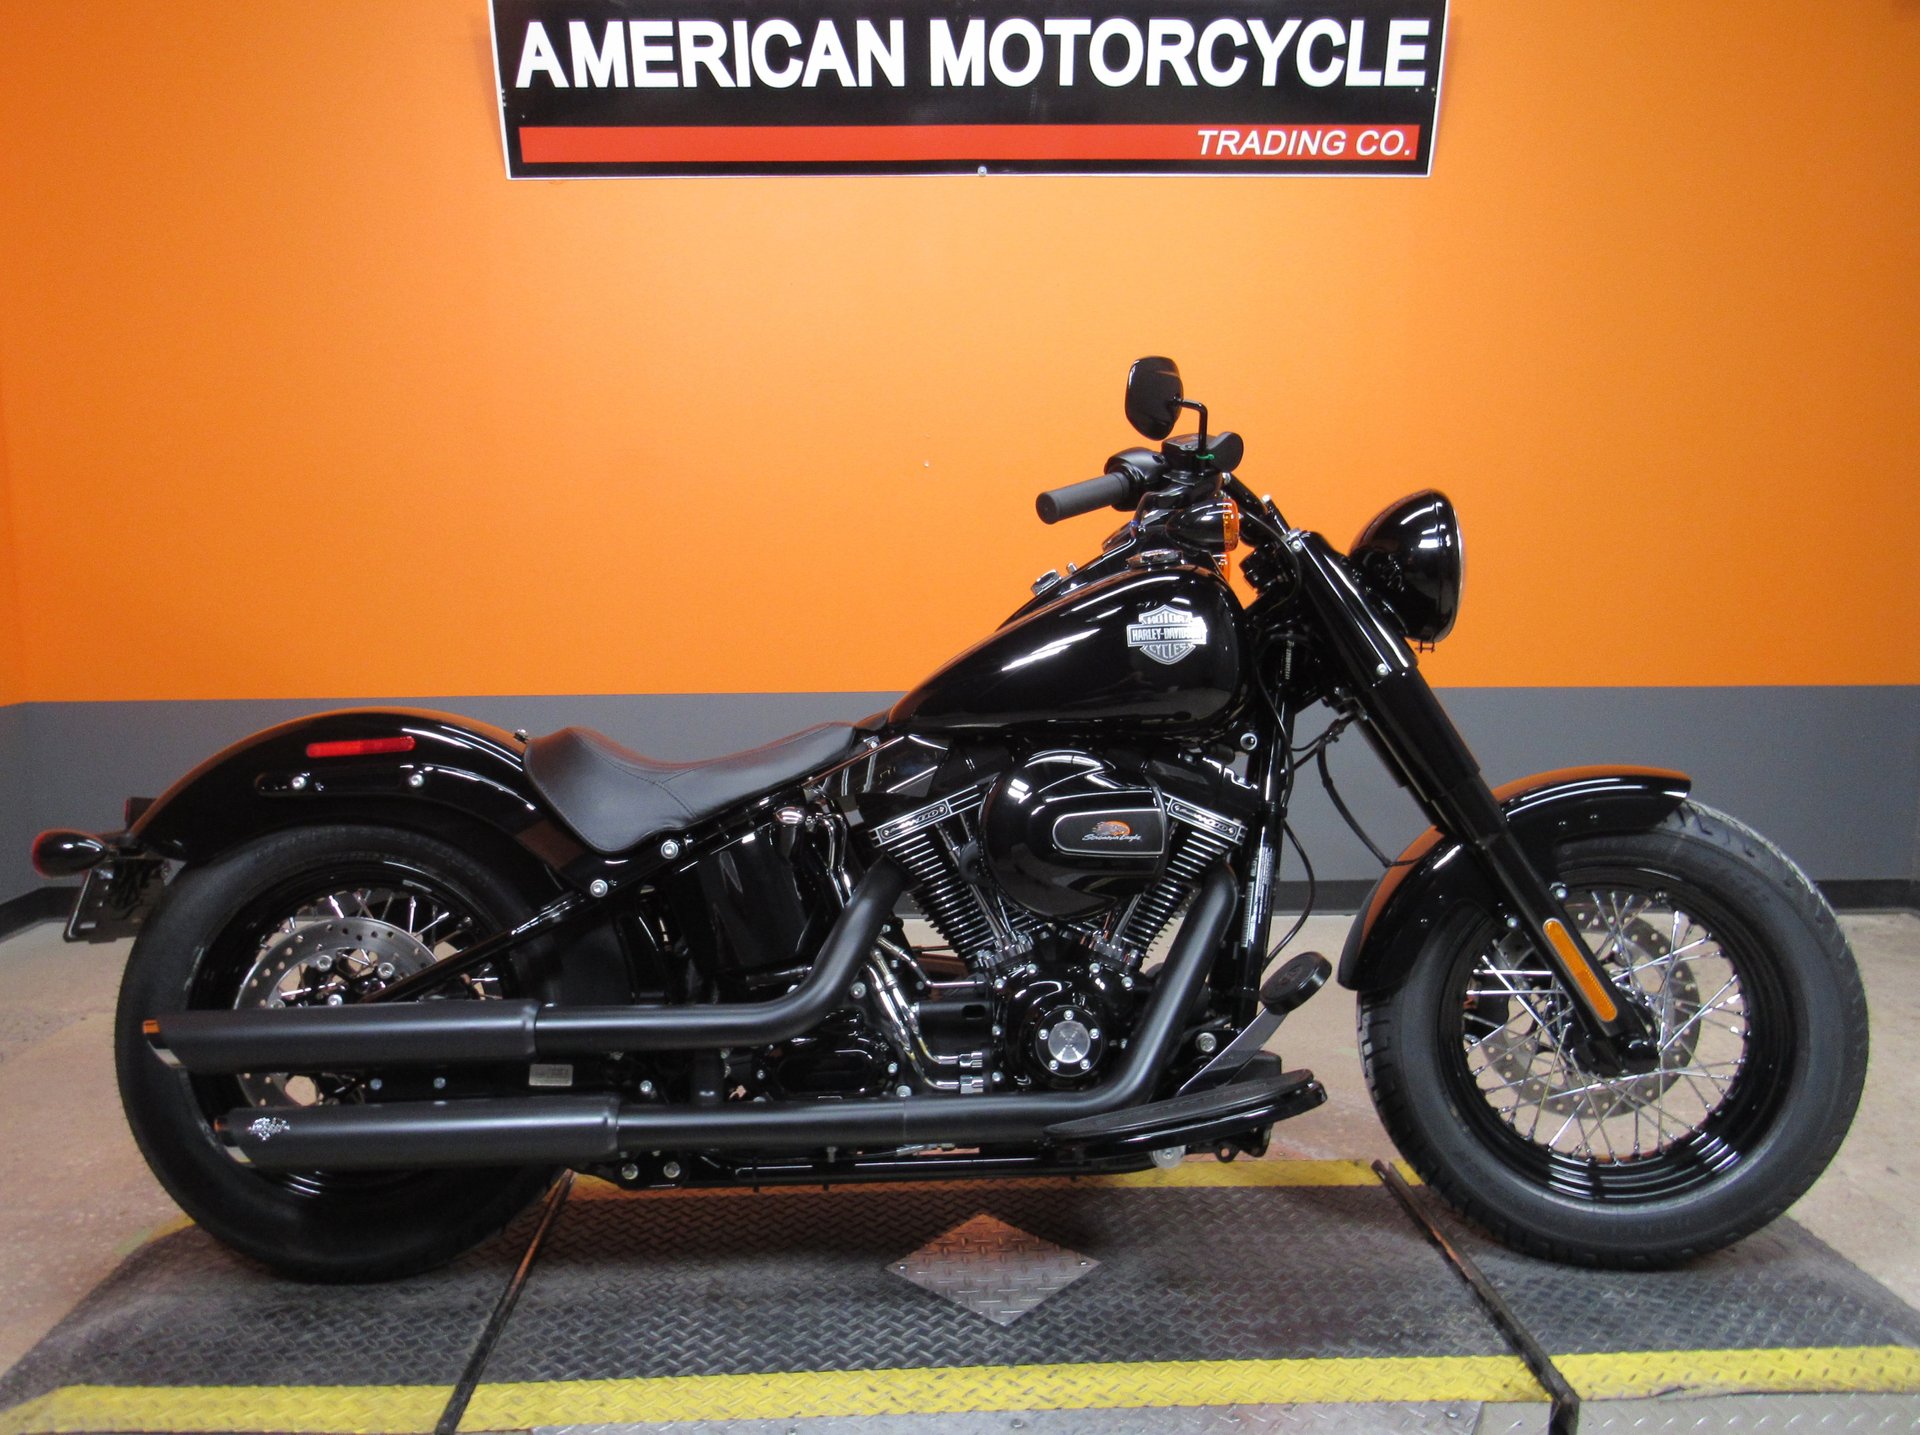 2017 Harley Davidson Softail Slim American Motorcycle Trading Company Used Harley Davidson Motorcycles